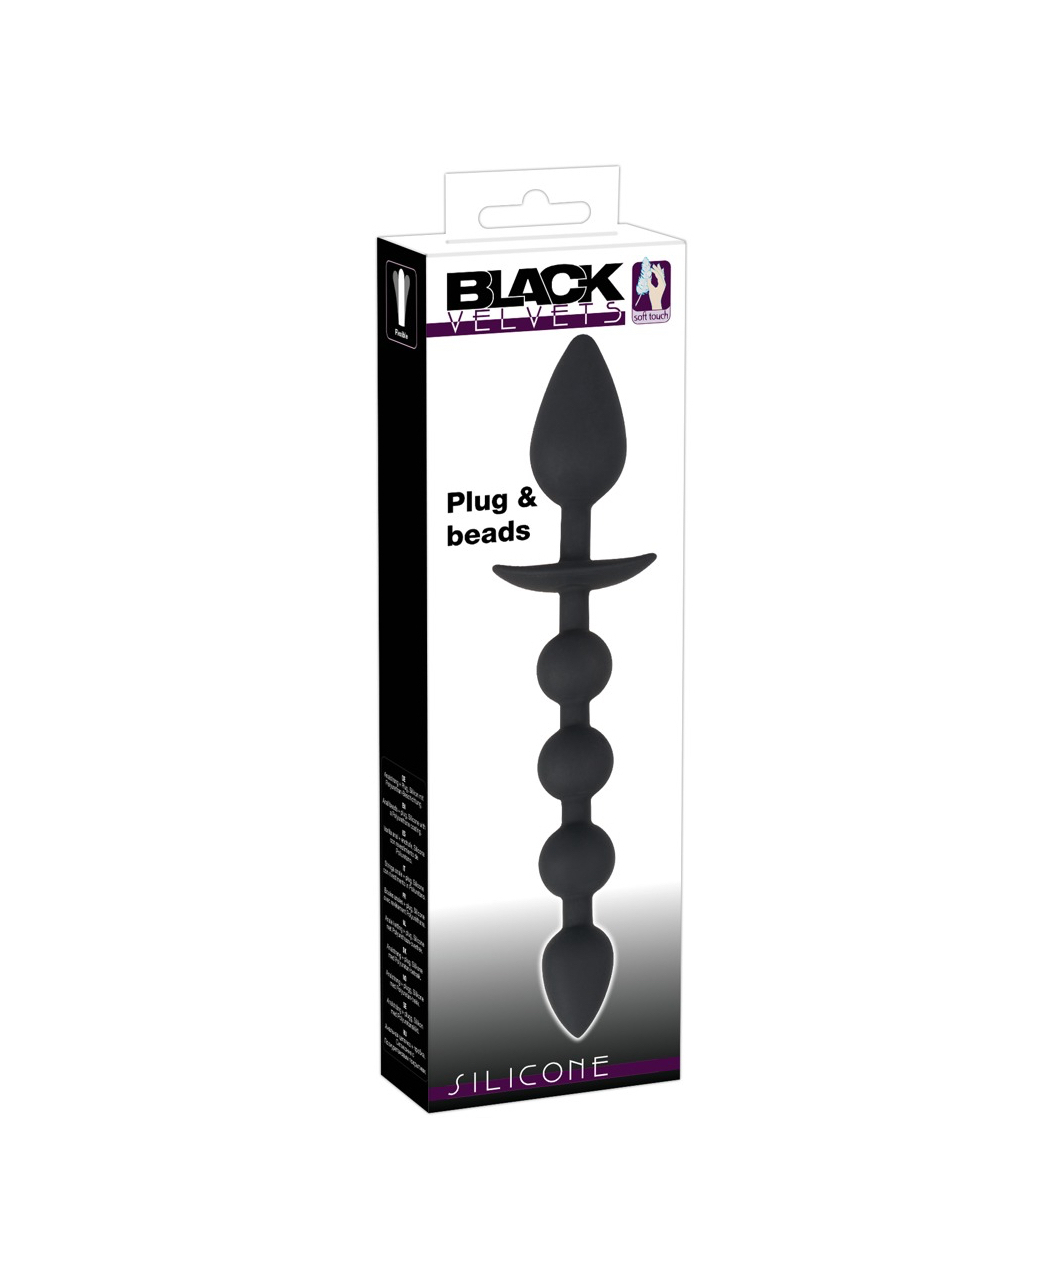 Black Velvets Plug & Beads